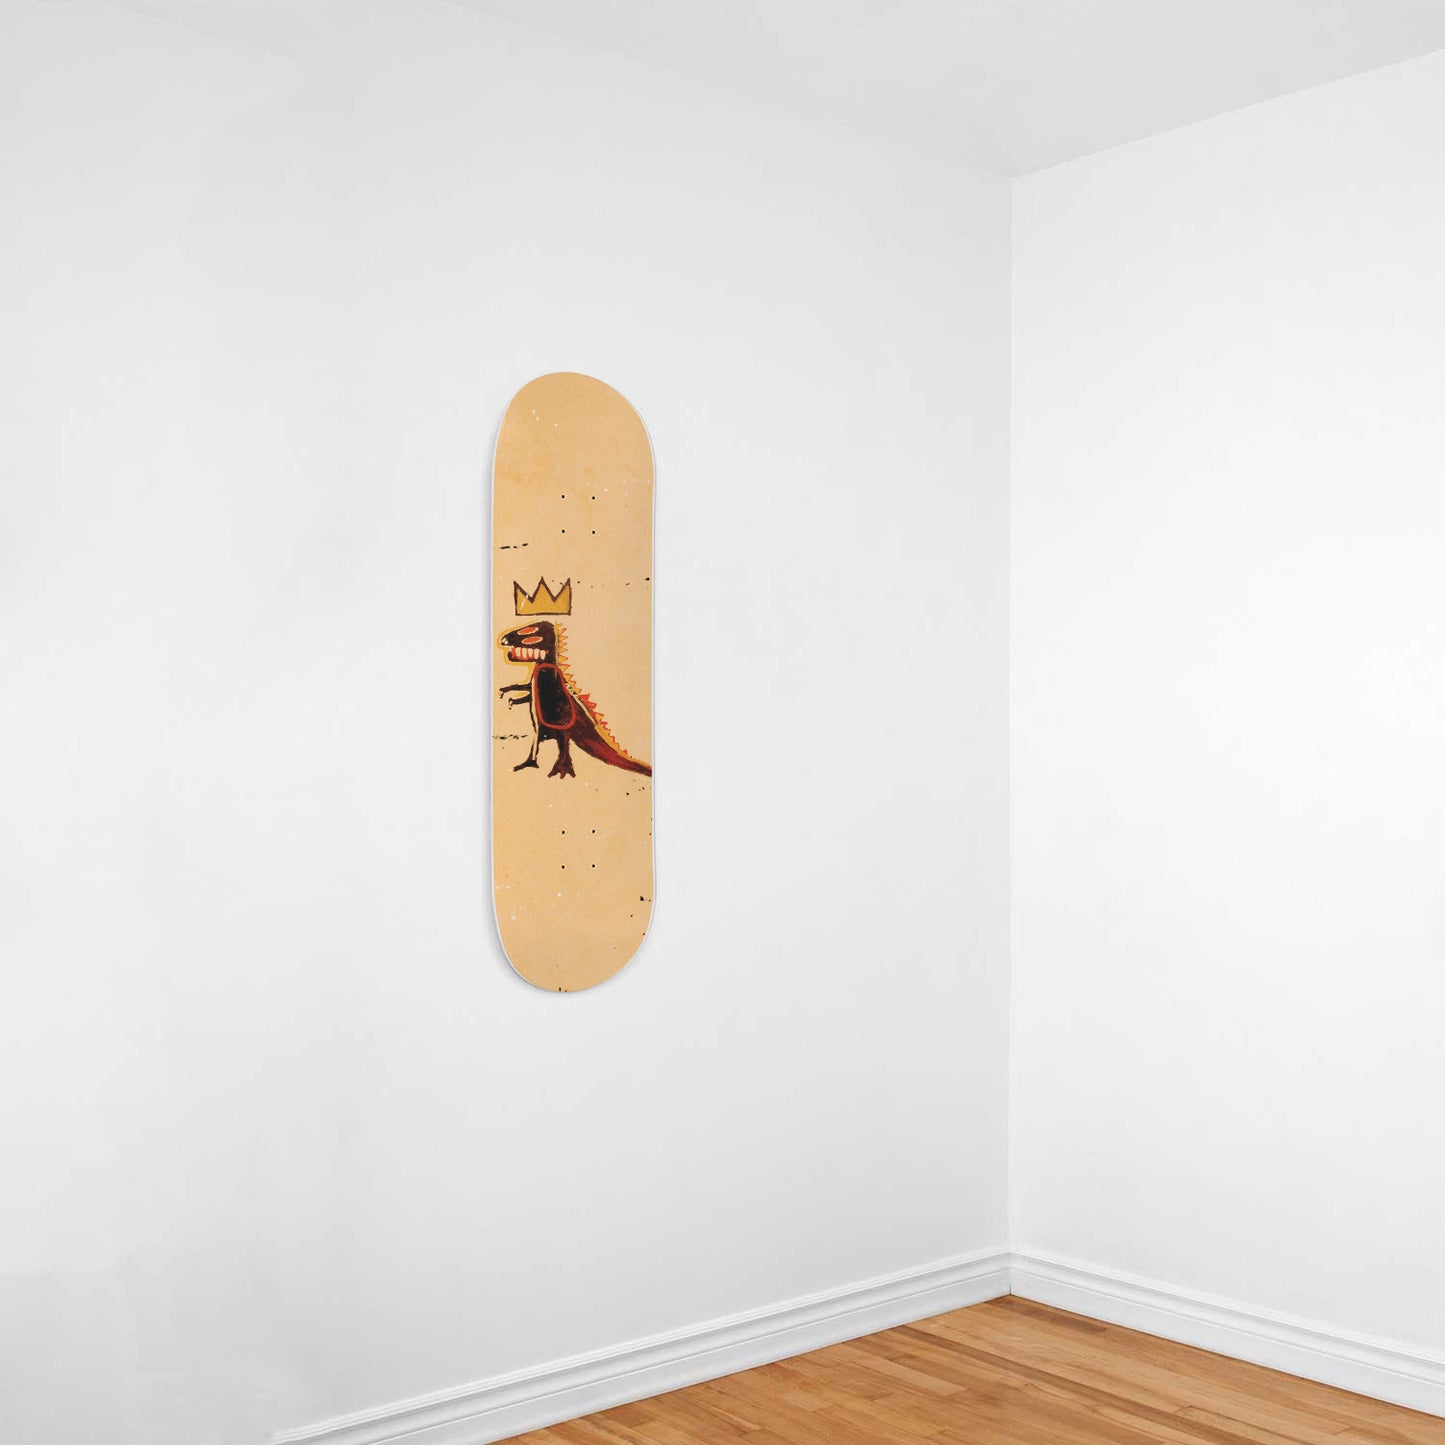 Dino on the Sand | Wall Art - Punky Dino | Dinosaur Inspired | 1 Piece Skateboard Wall Art, Deck Art | Wall Hanging Decor | Custom Printed Wall Art